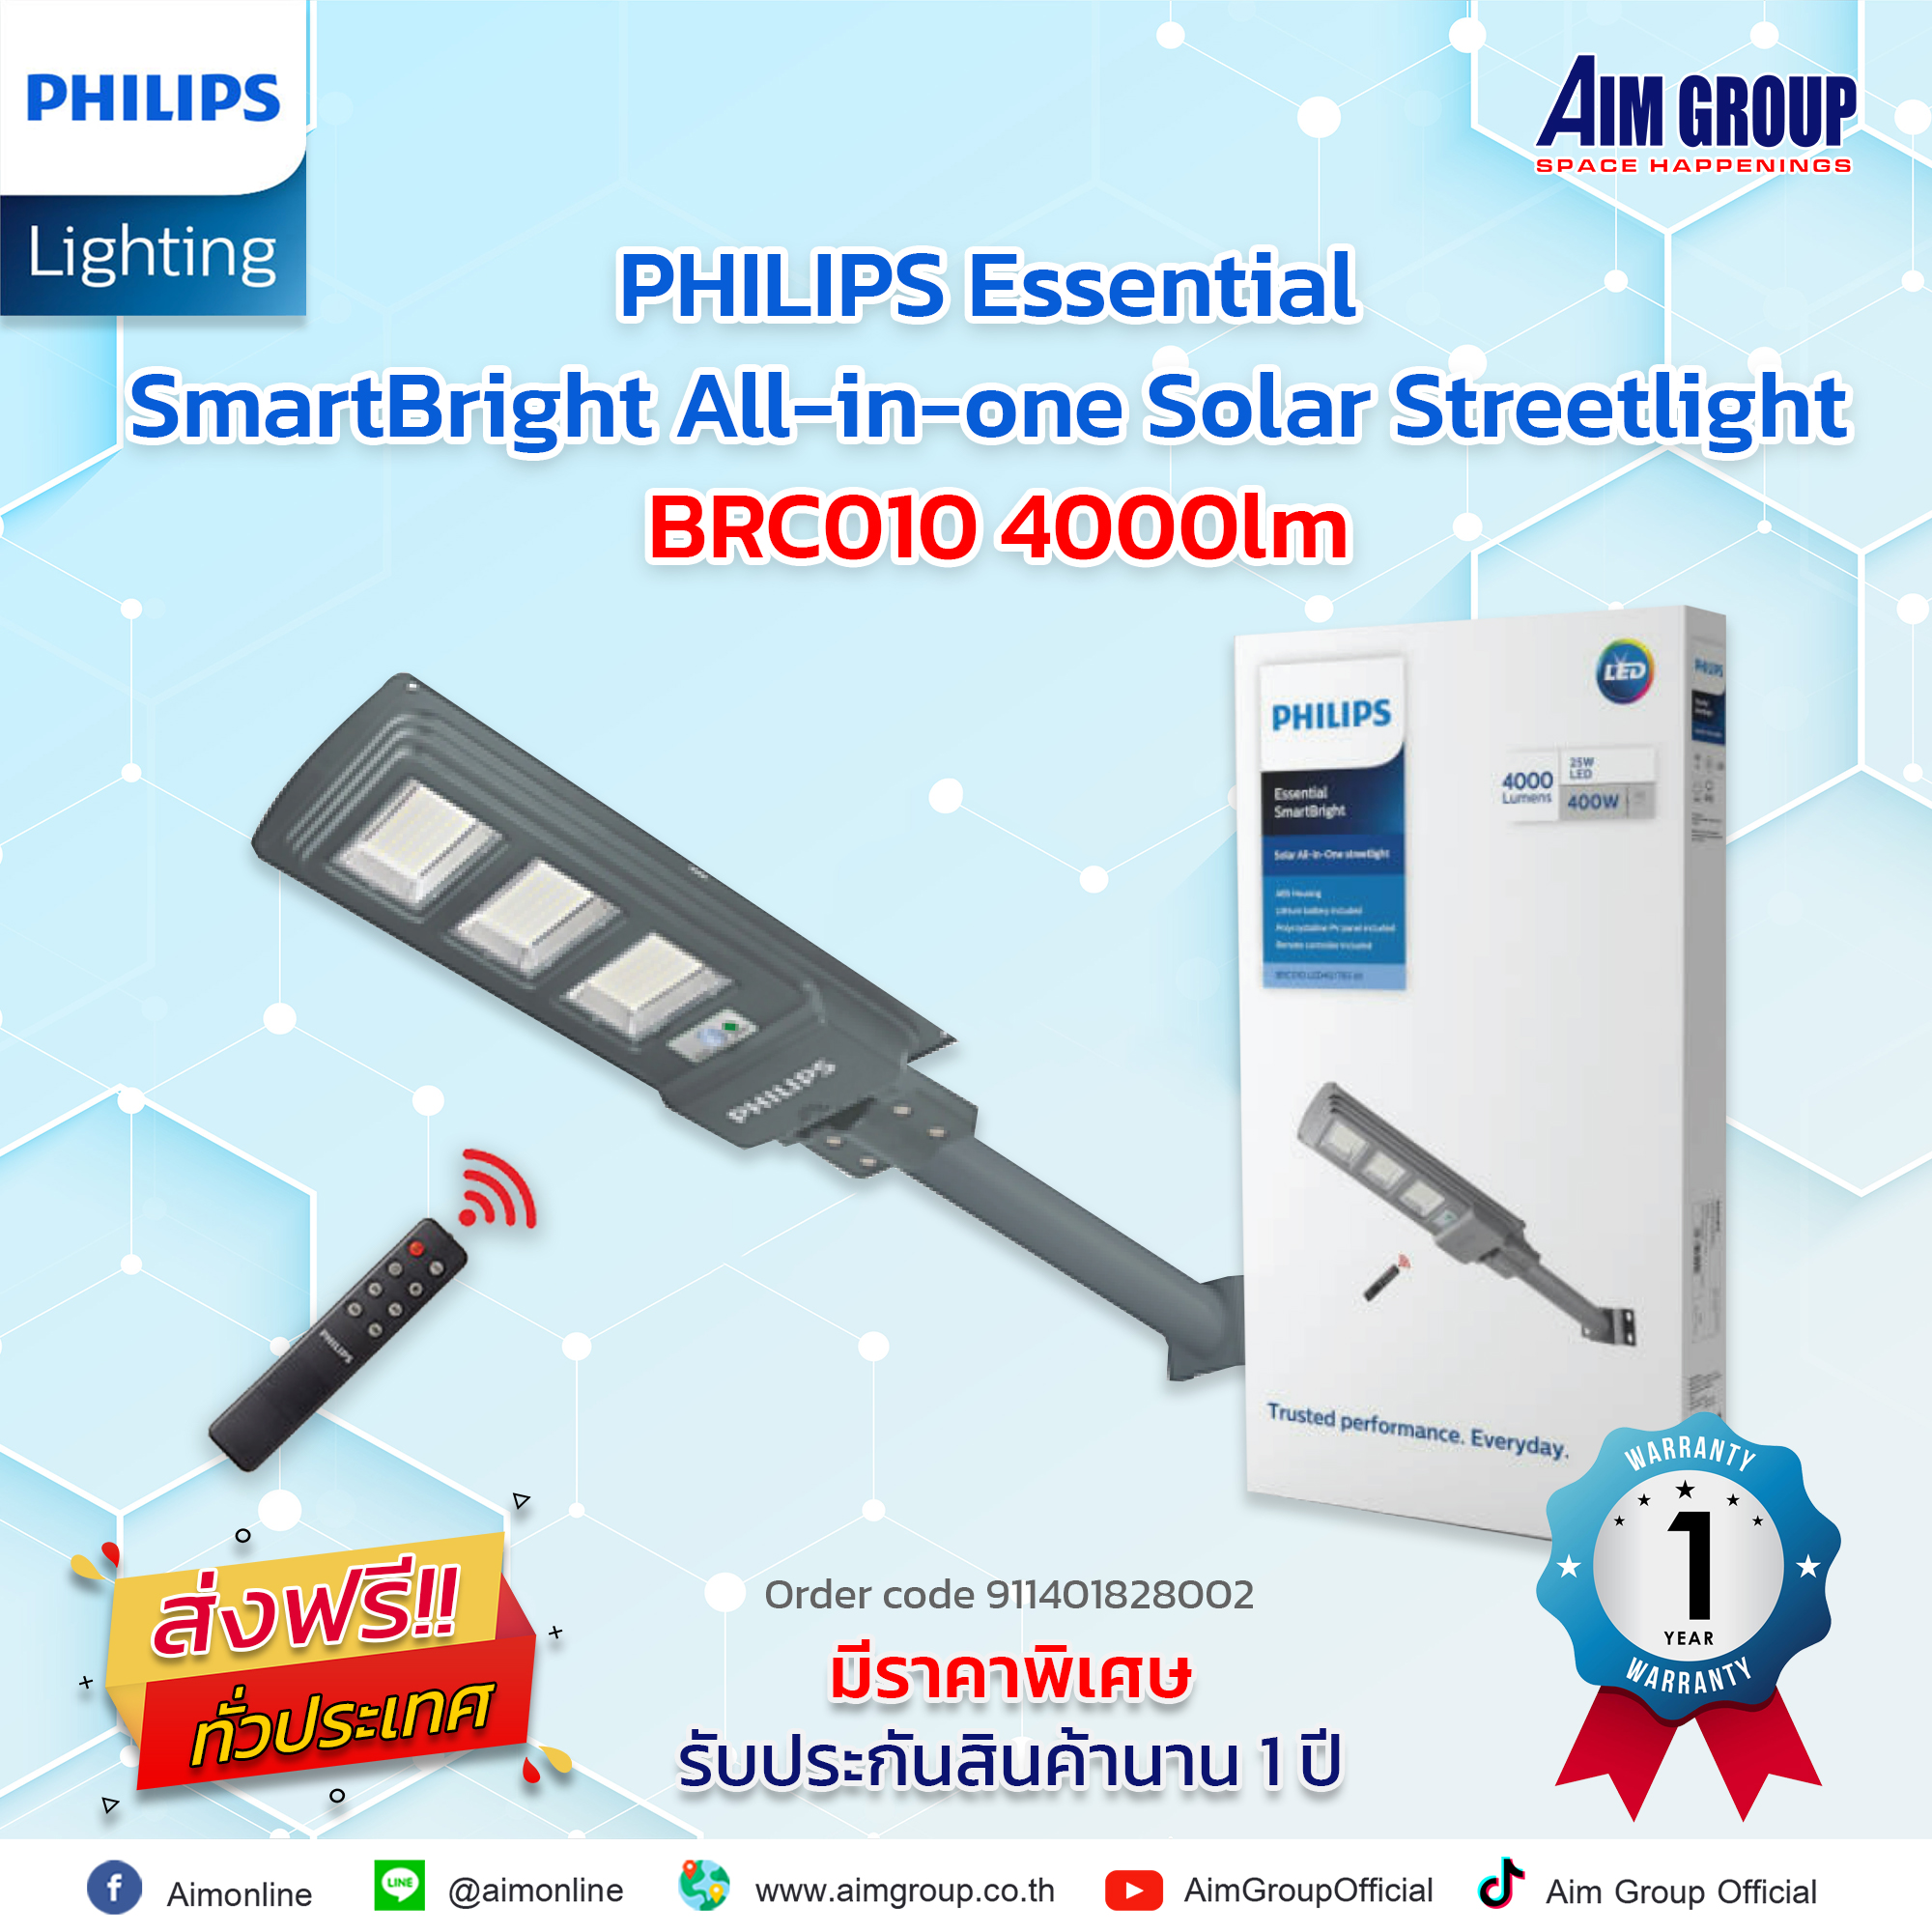 PHILIPS Essential SmartBright All-in-one Solar Streetlight BRC010 4000lm